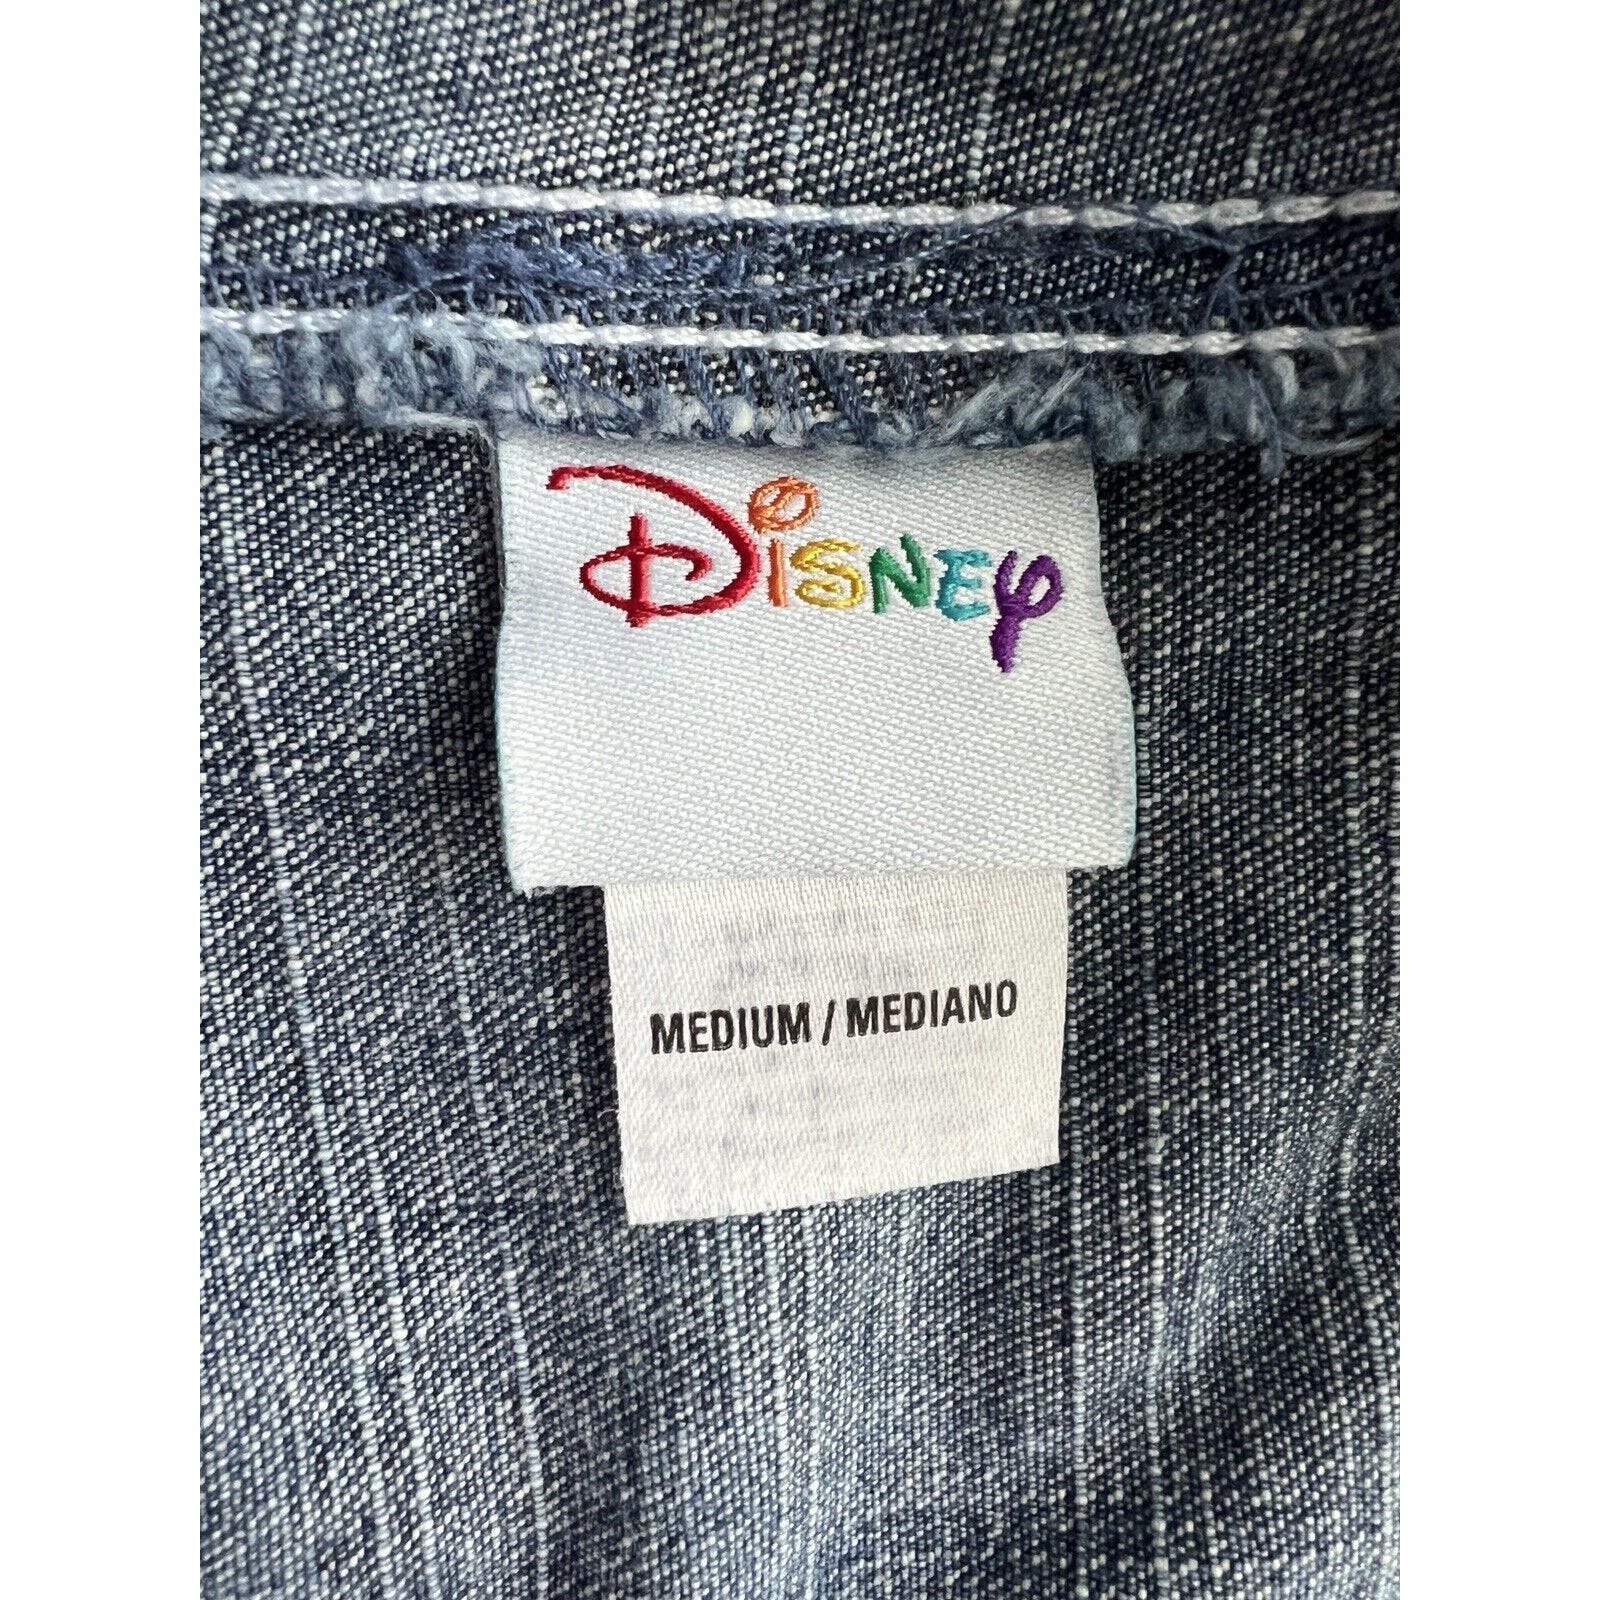 Disney Denim Overalls Women's Medium Straight Leg Vintage Y2K Jeans Cargo